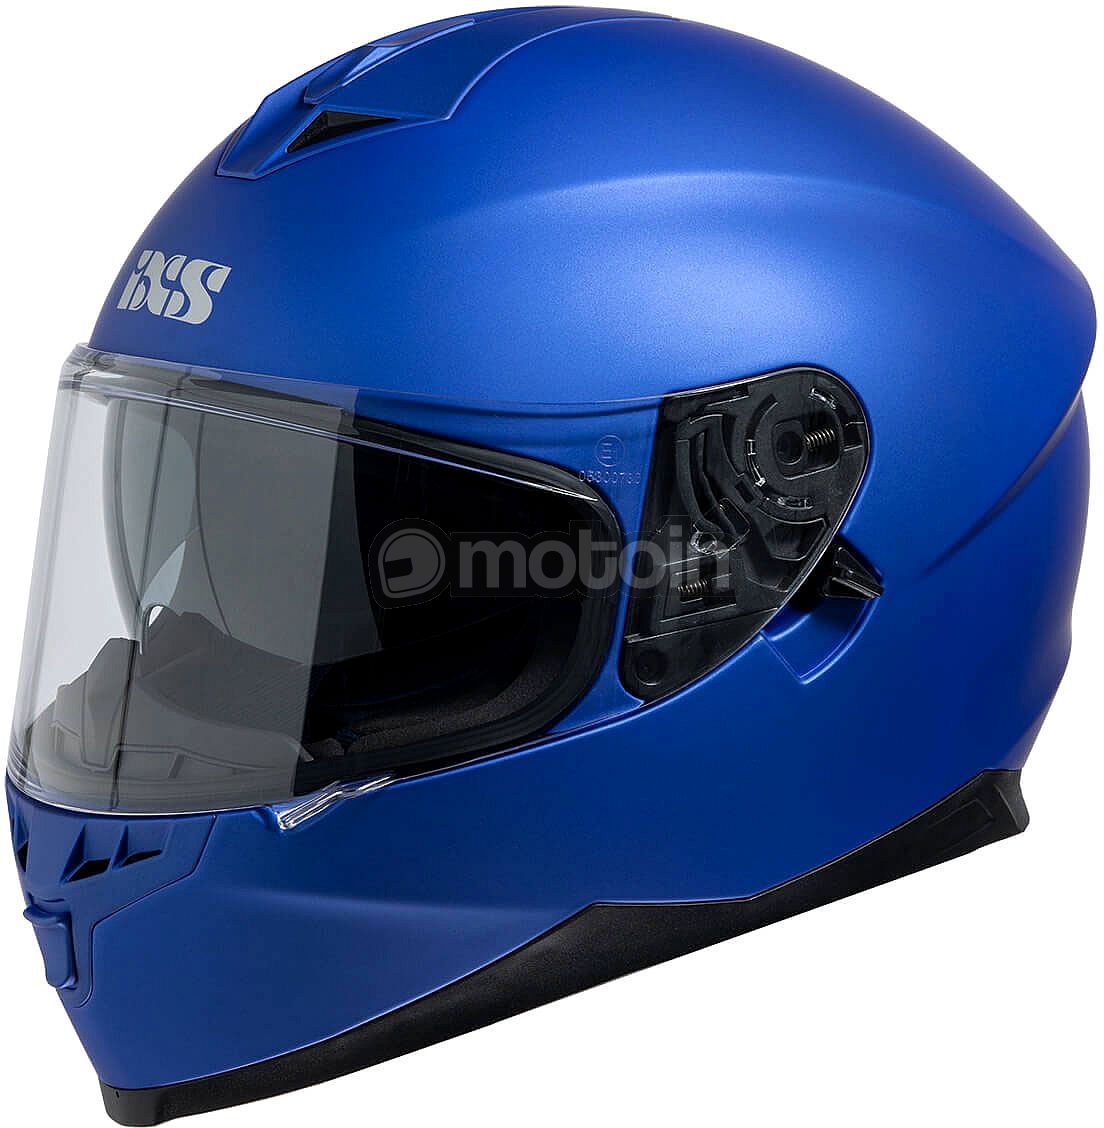 IXS 1100 1.0, integral helmet